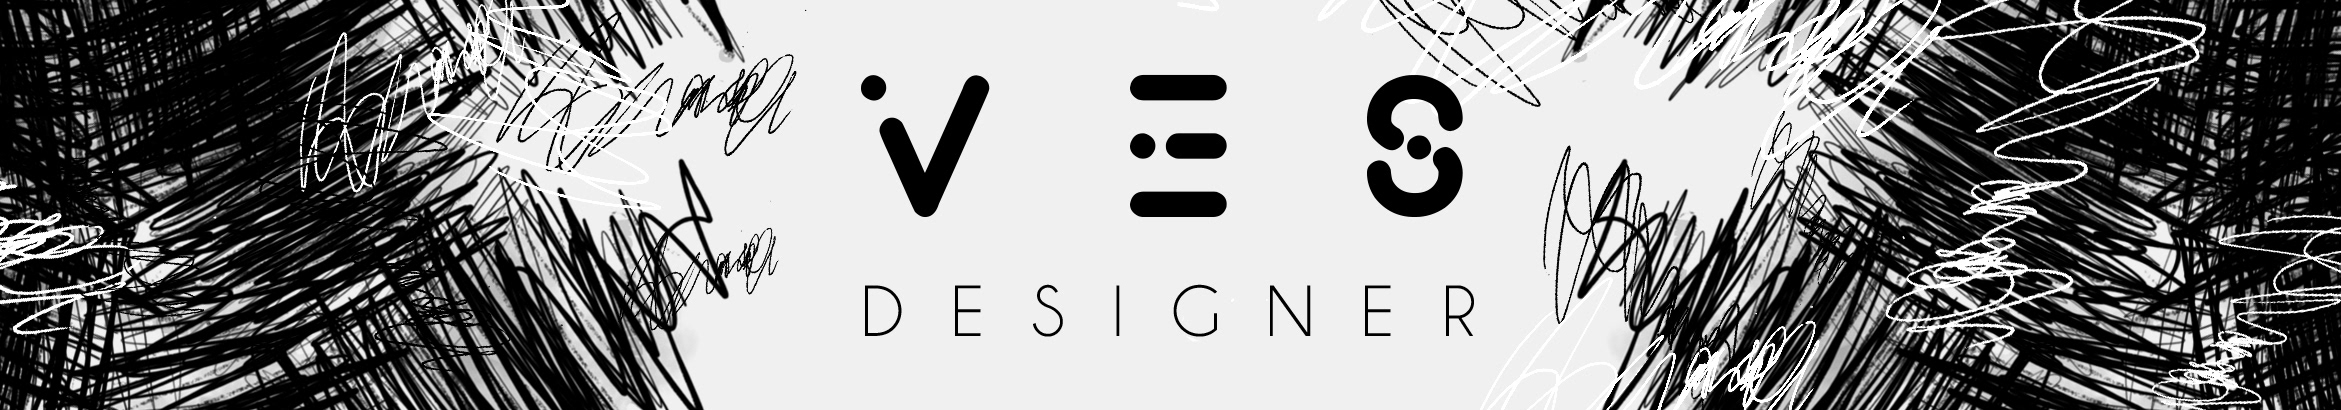 VES Designers profilbanner